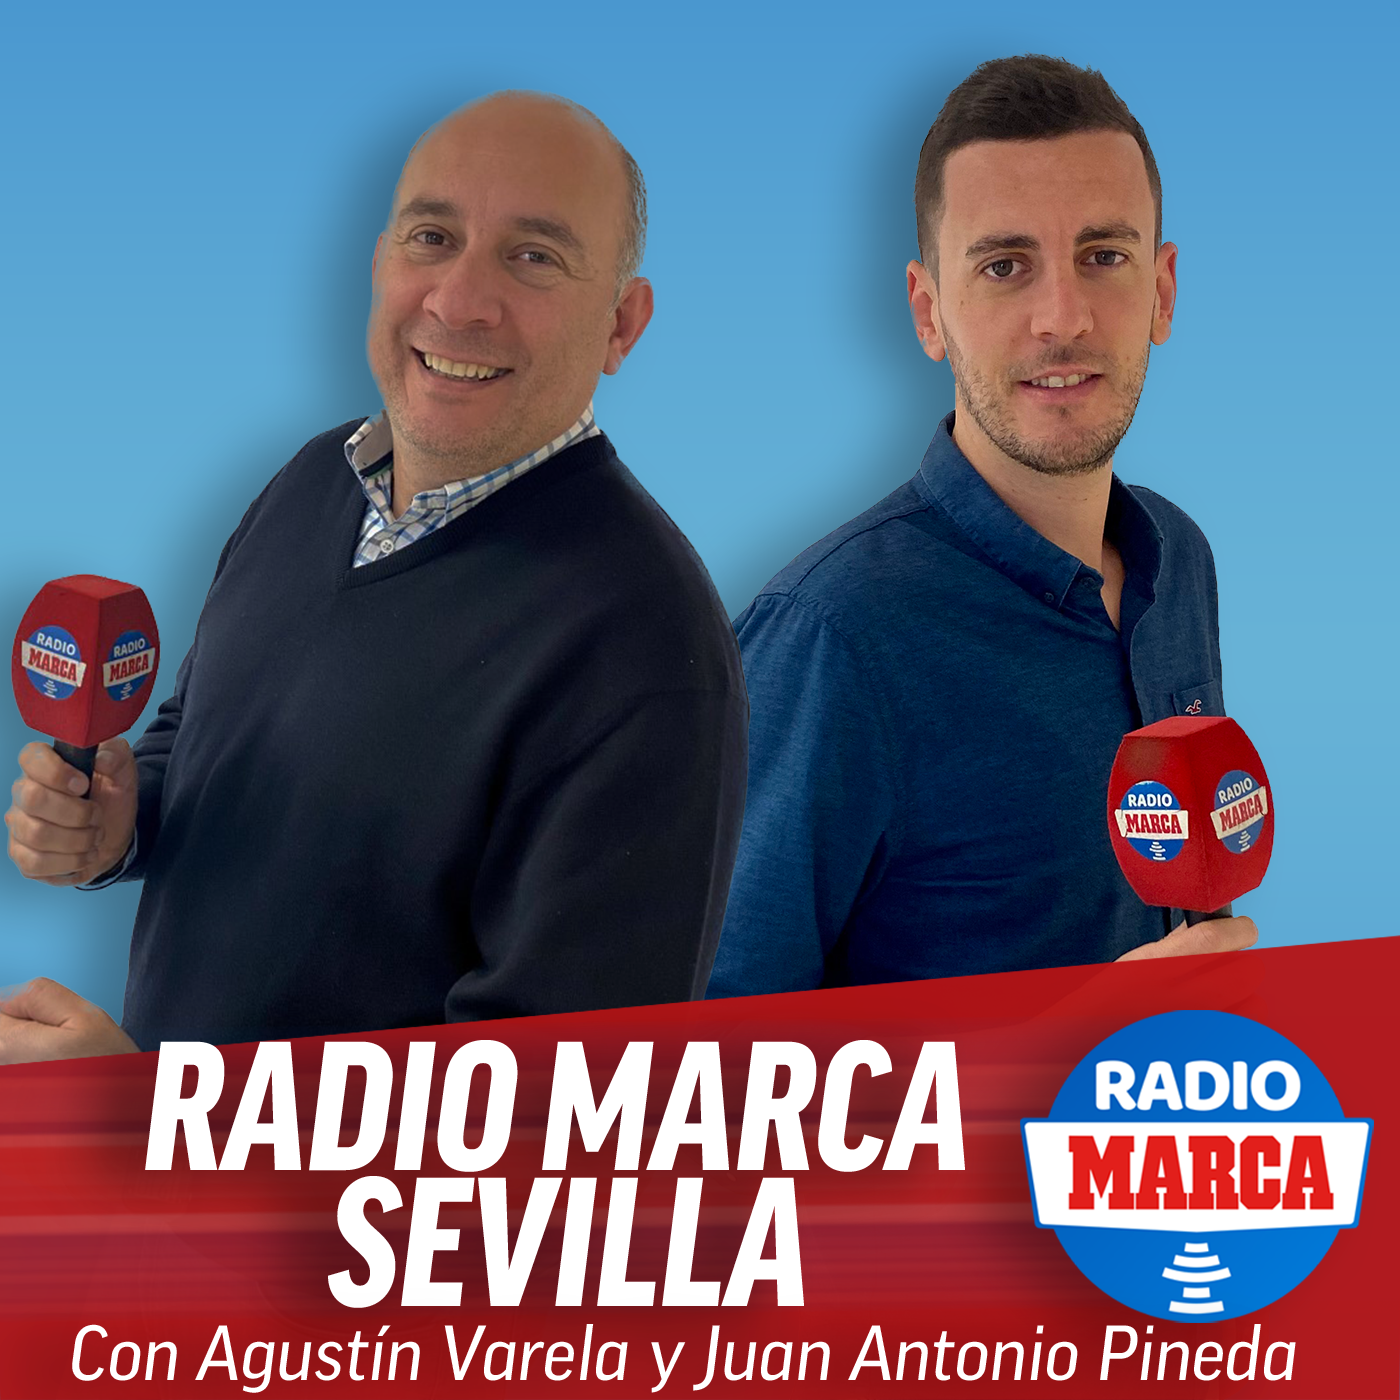 PODCAST DIRECTO MARCA SEVILLA 24/09/2021 RADIO MARCA